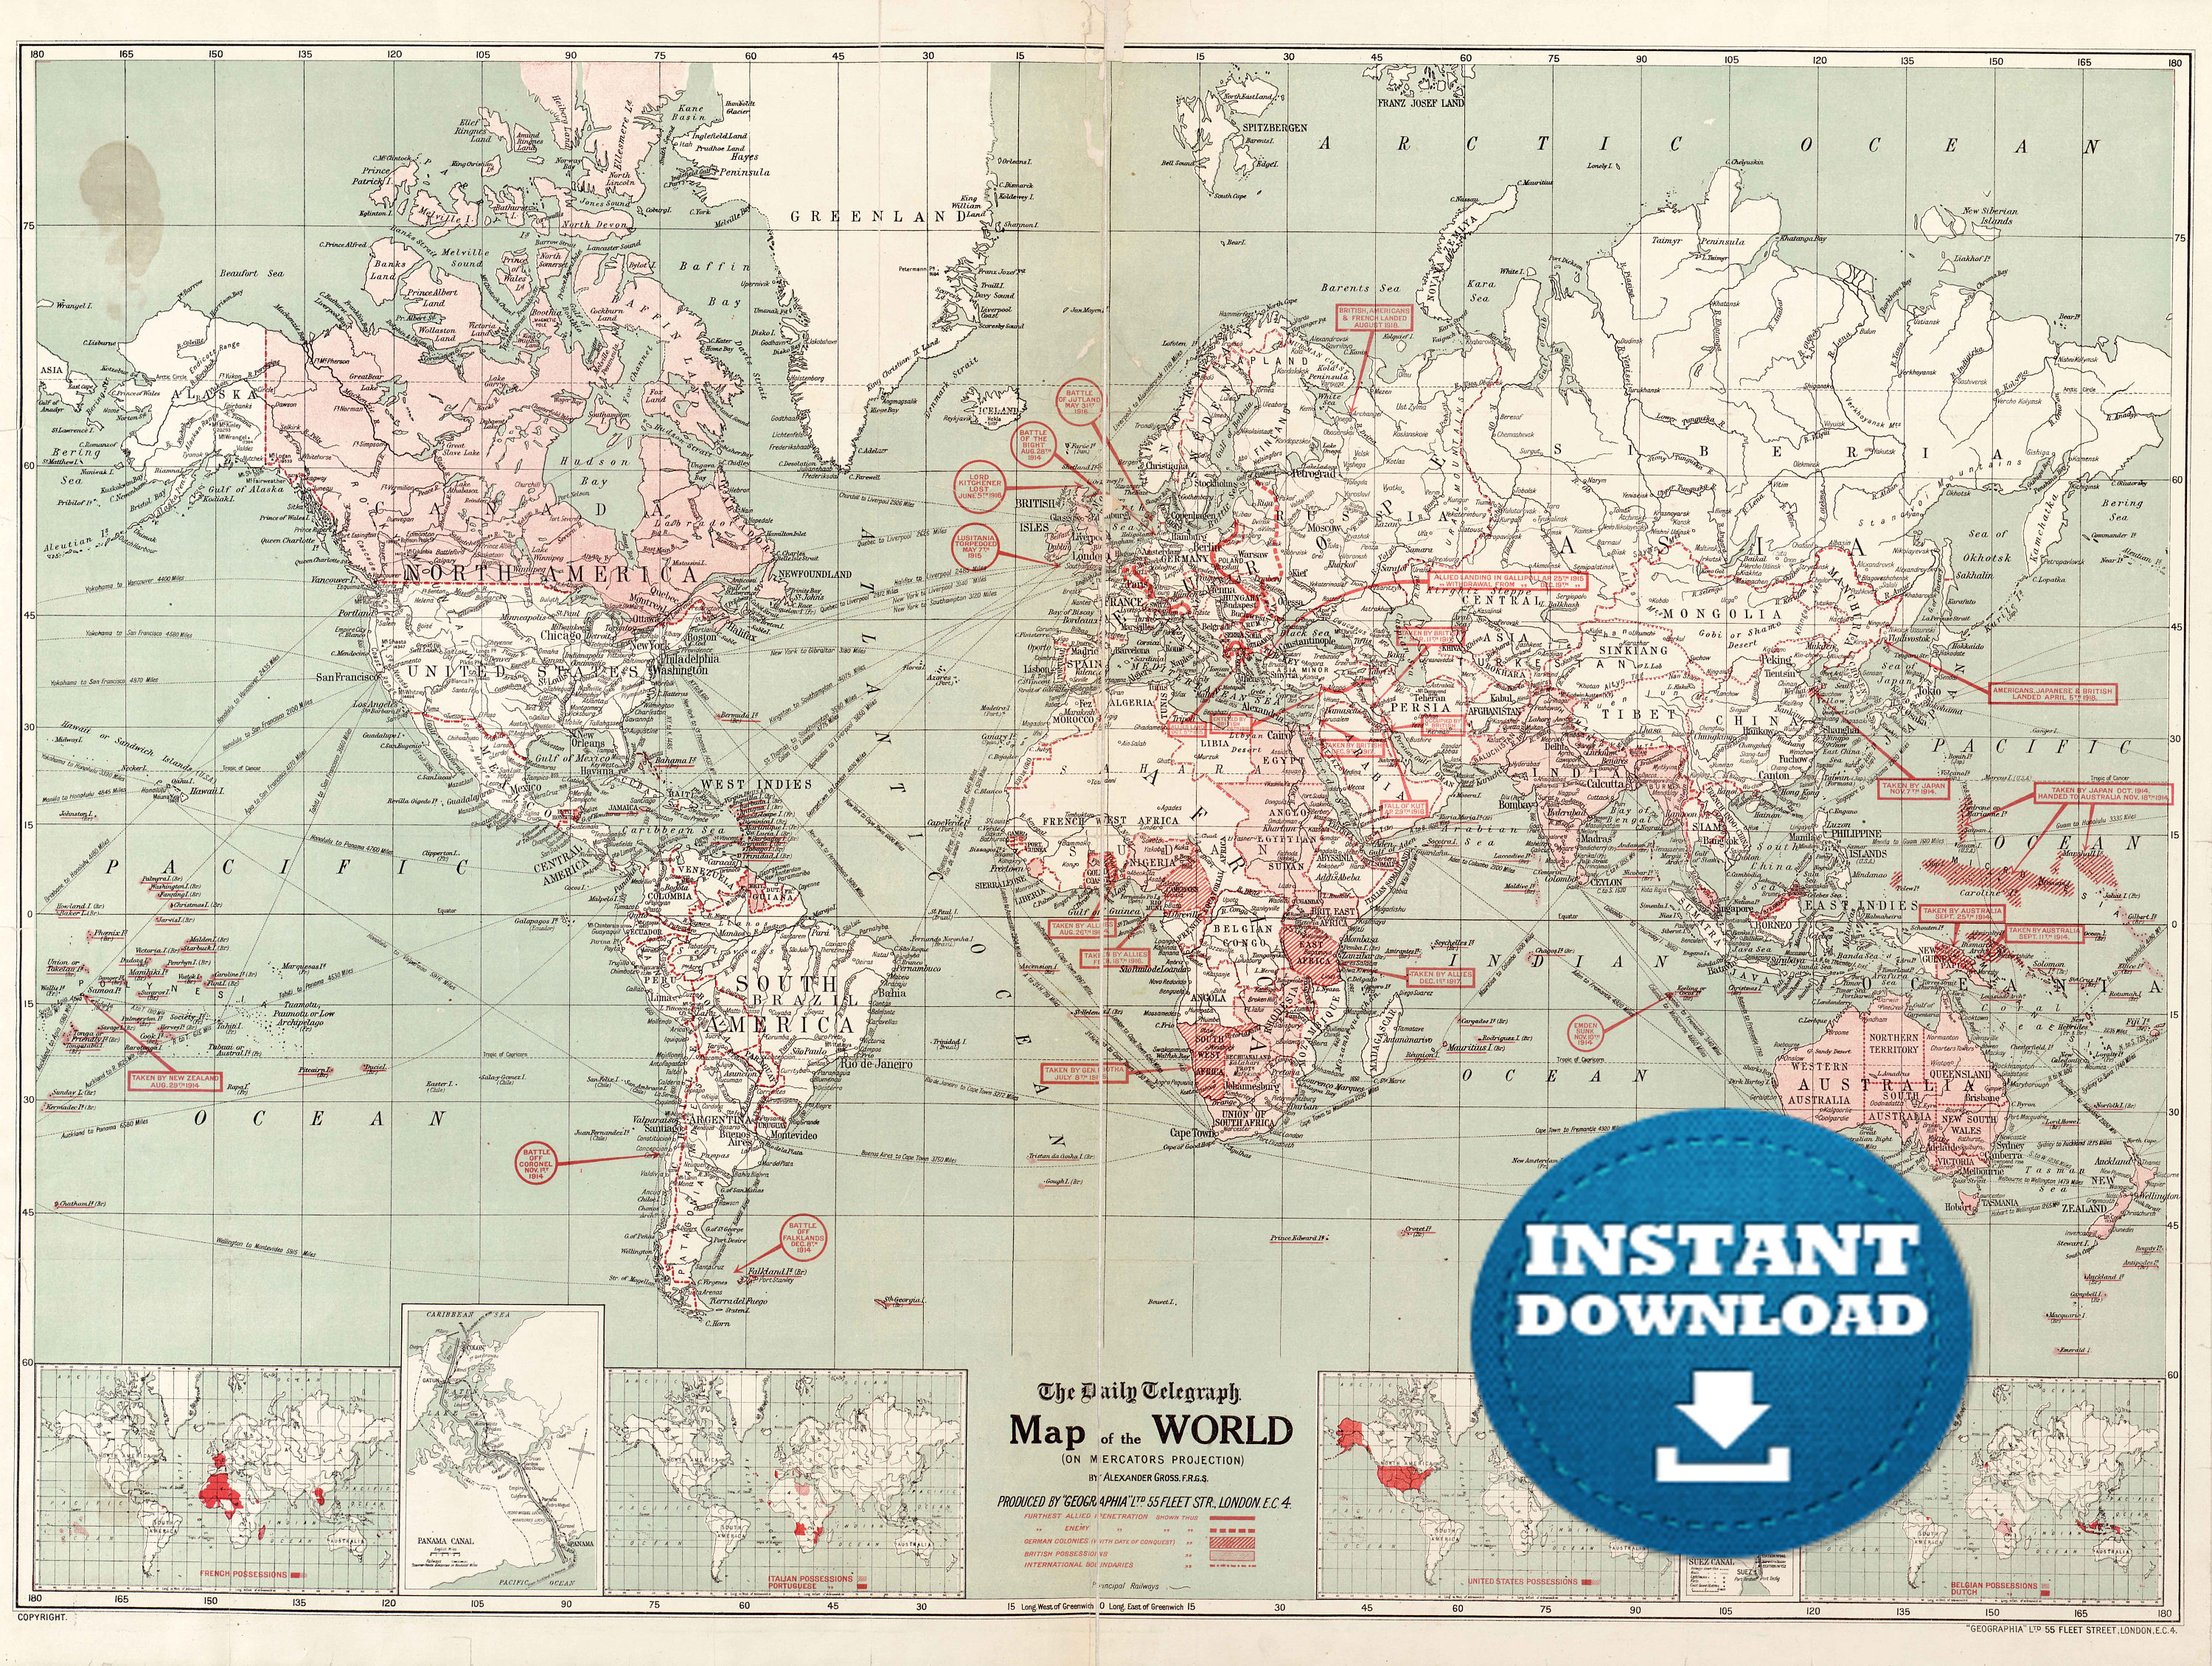 Digital Old World Map Printable Download. Vintage World Map. | Etsy - Vintage World Map Printable